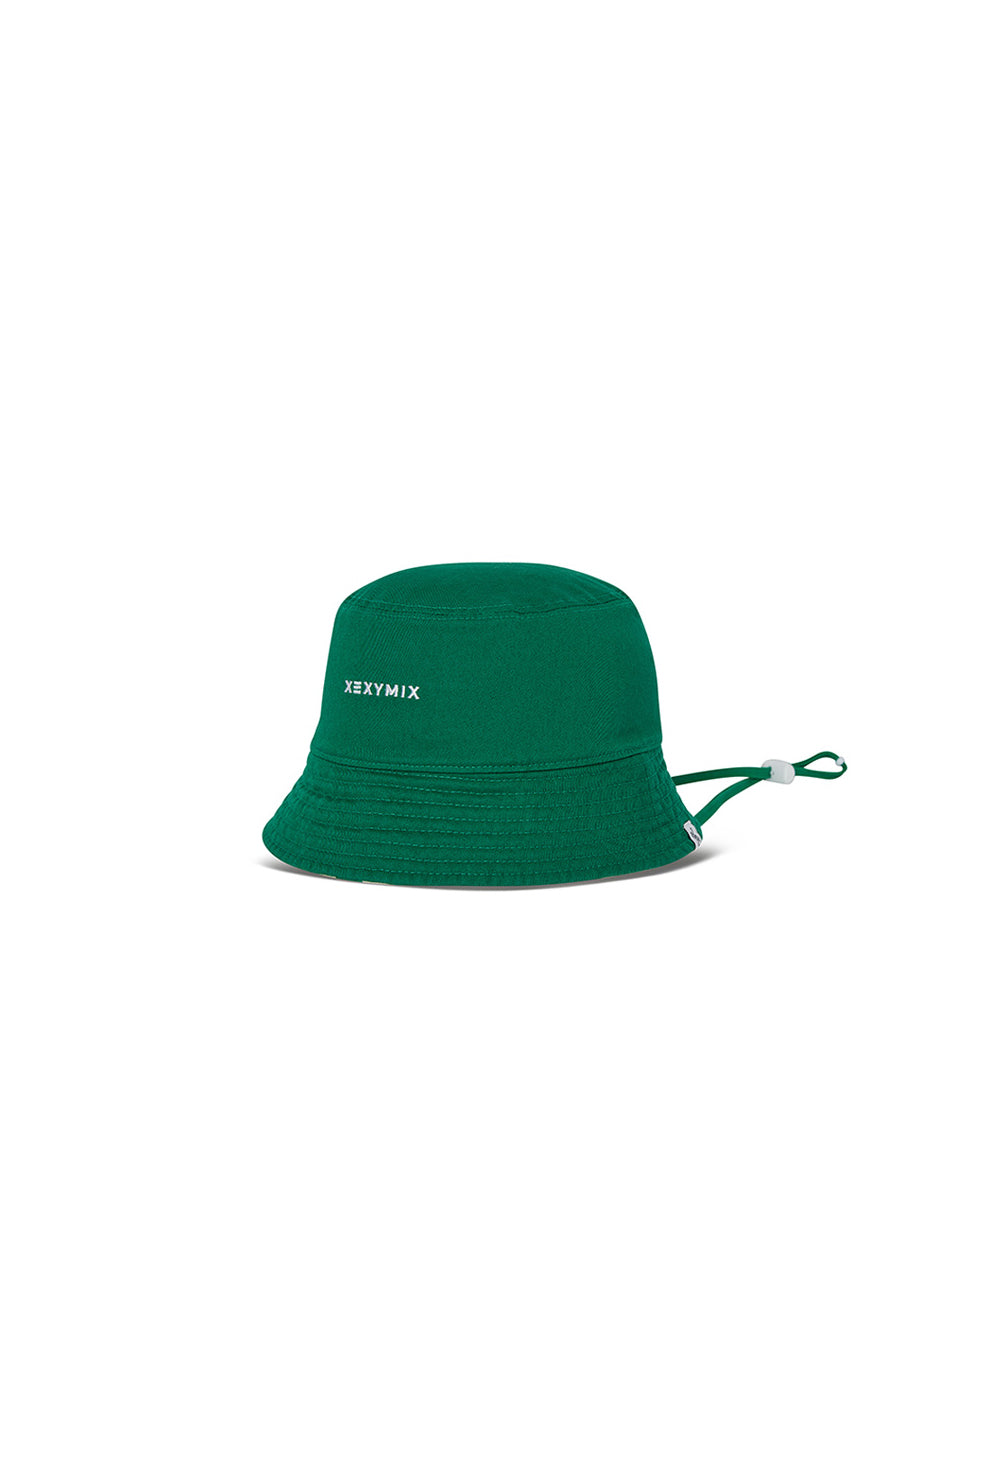 Checker Reversable Bucket Hat - Forest Green